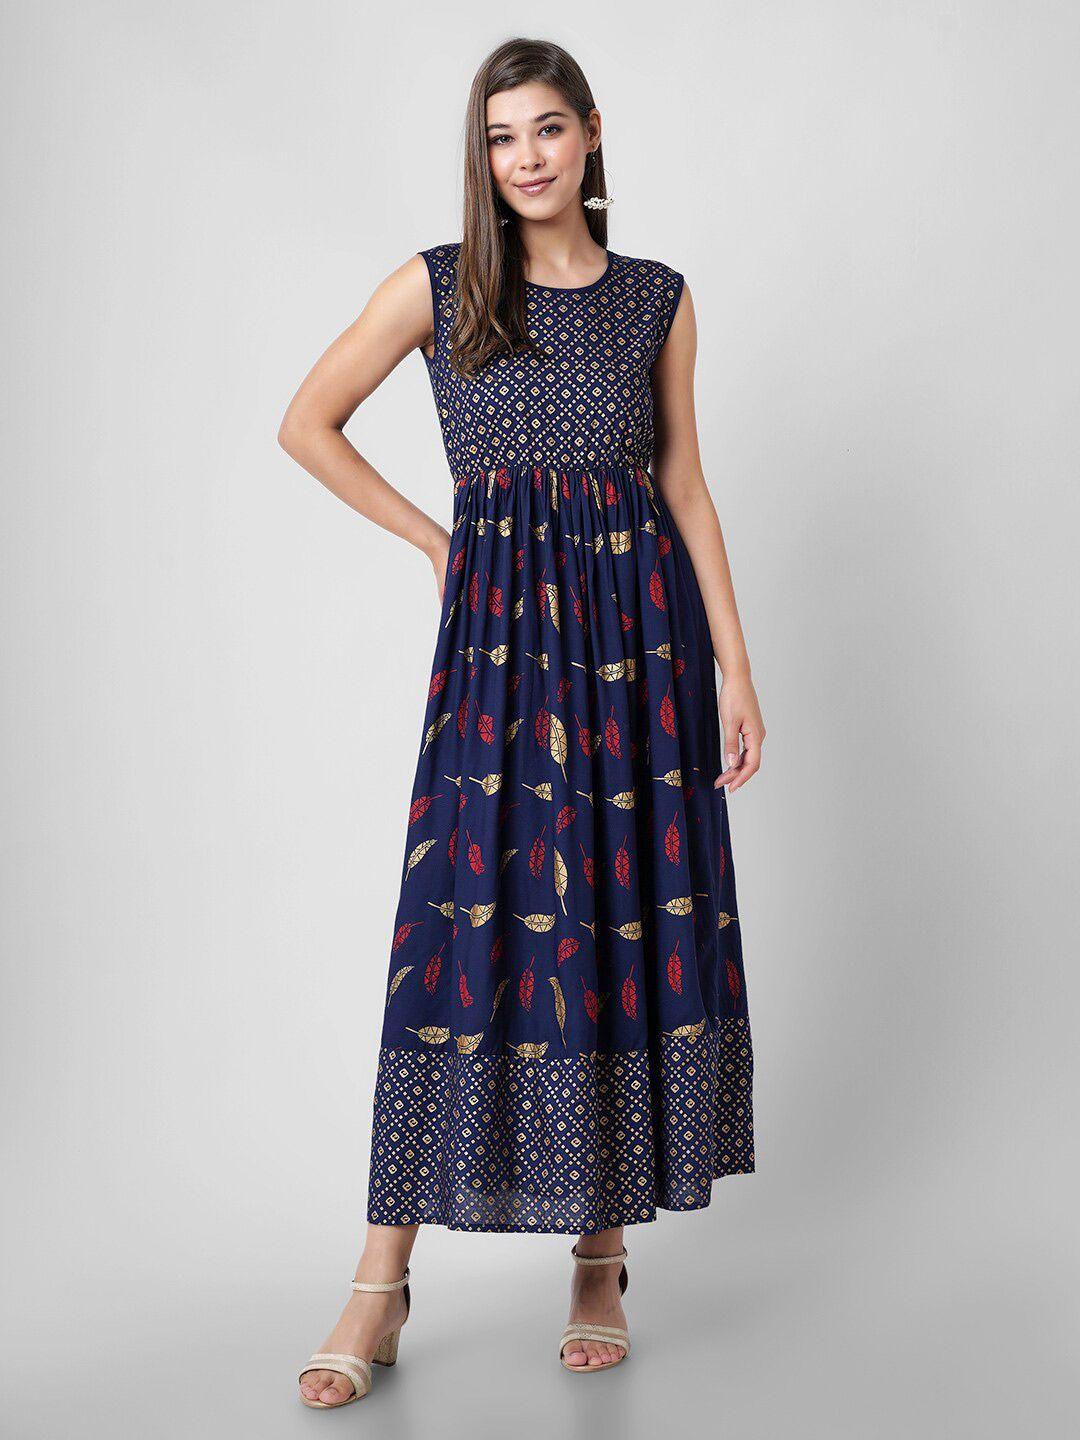 purshottam wala blue & red empire maxi dress